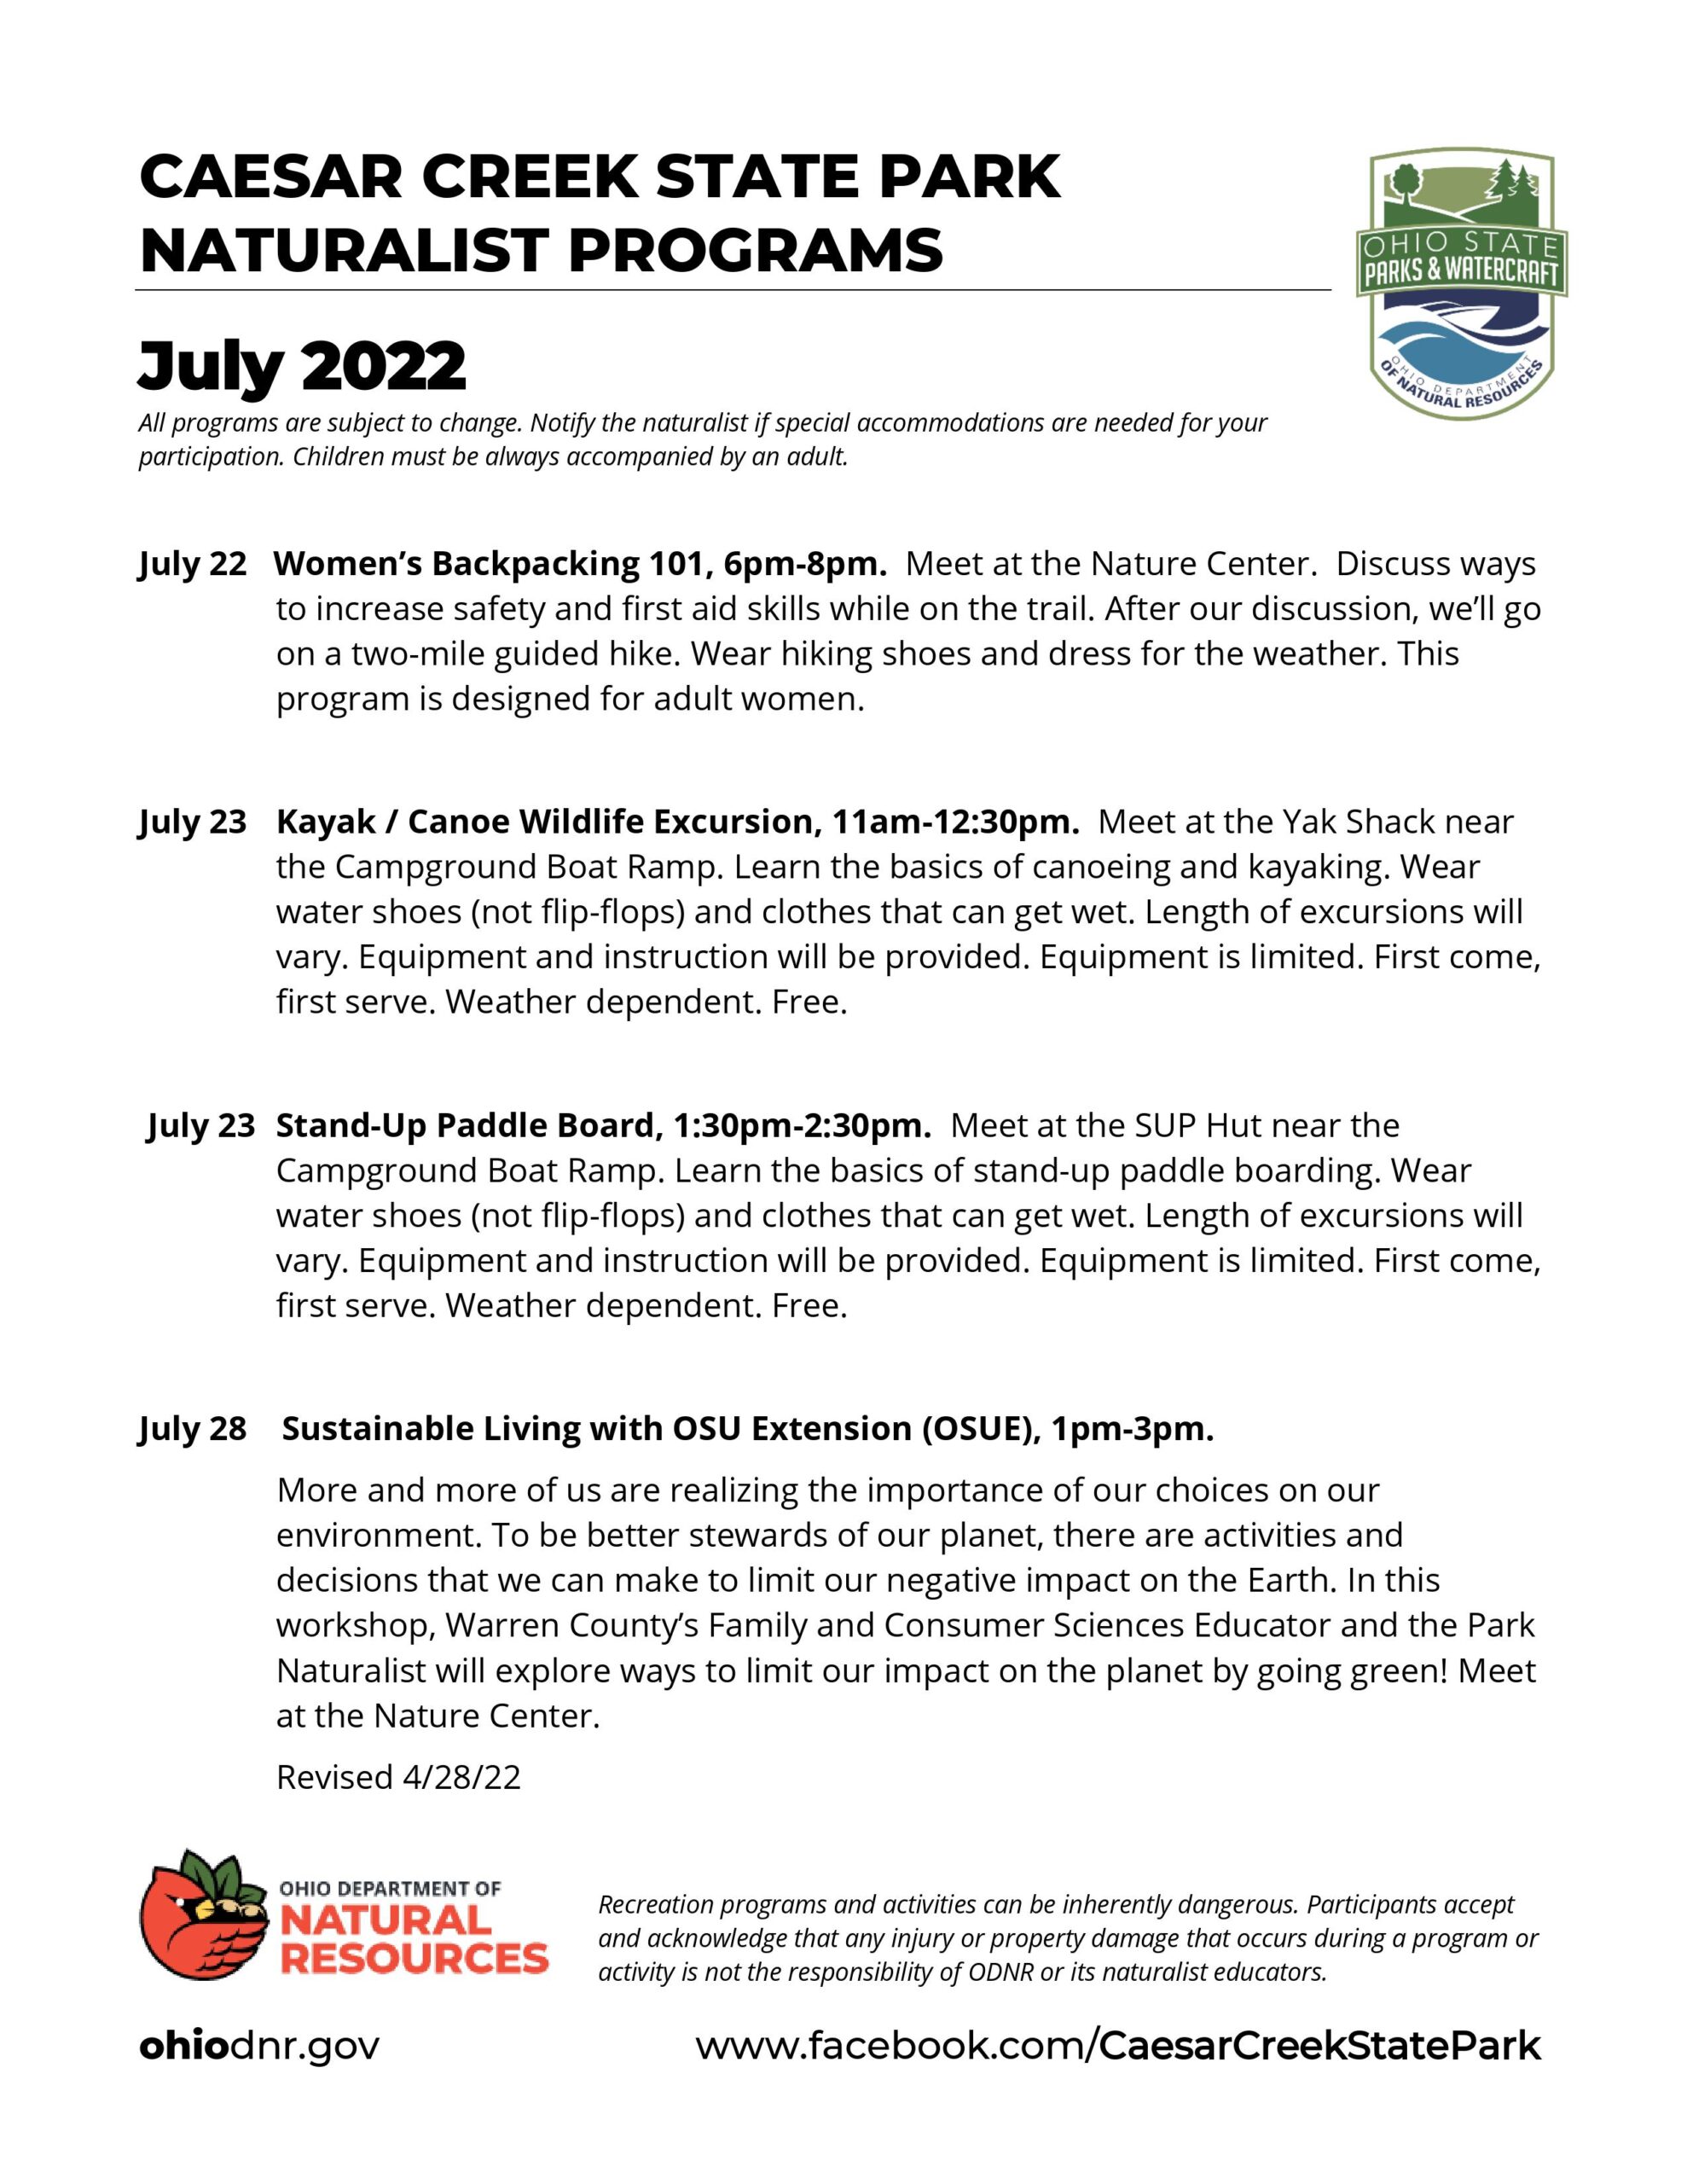 July 2022 Programs4